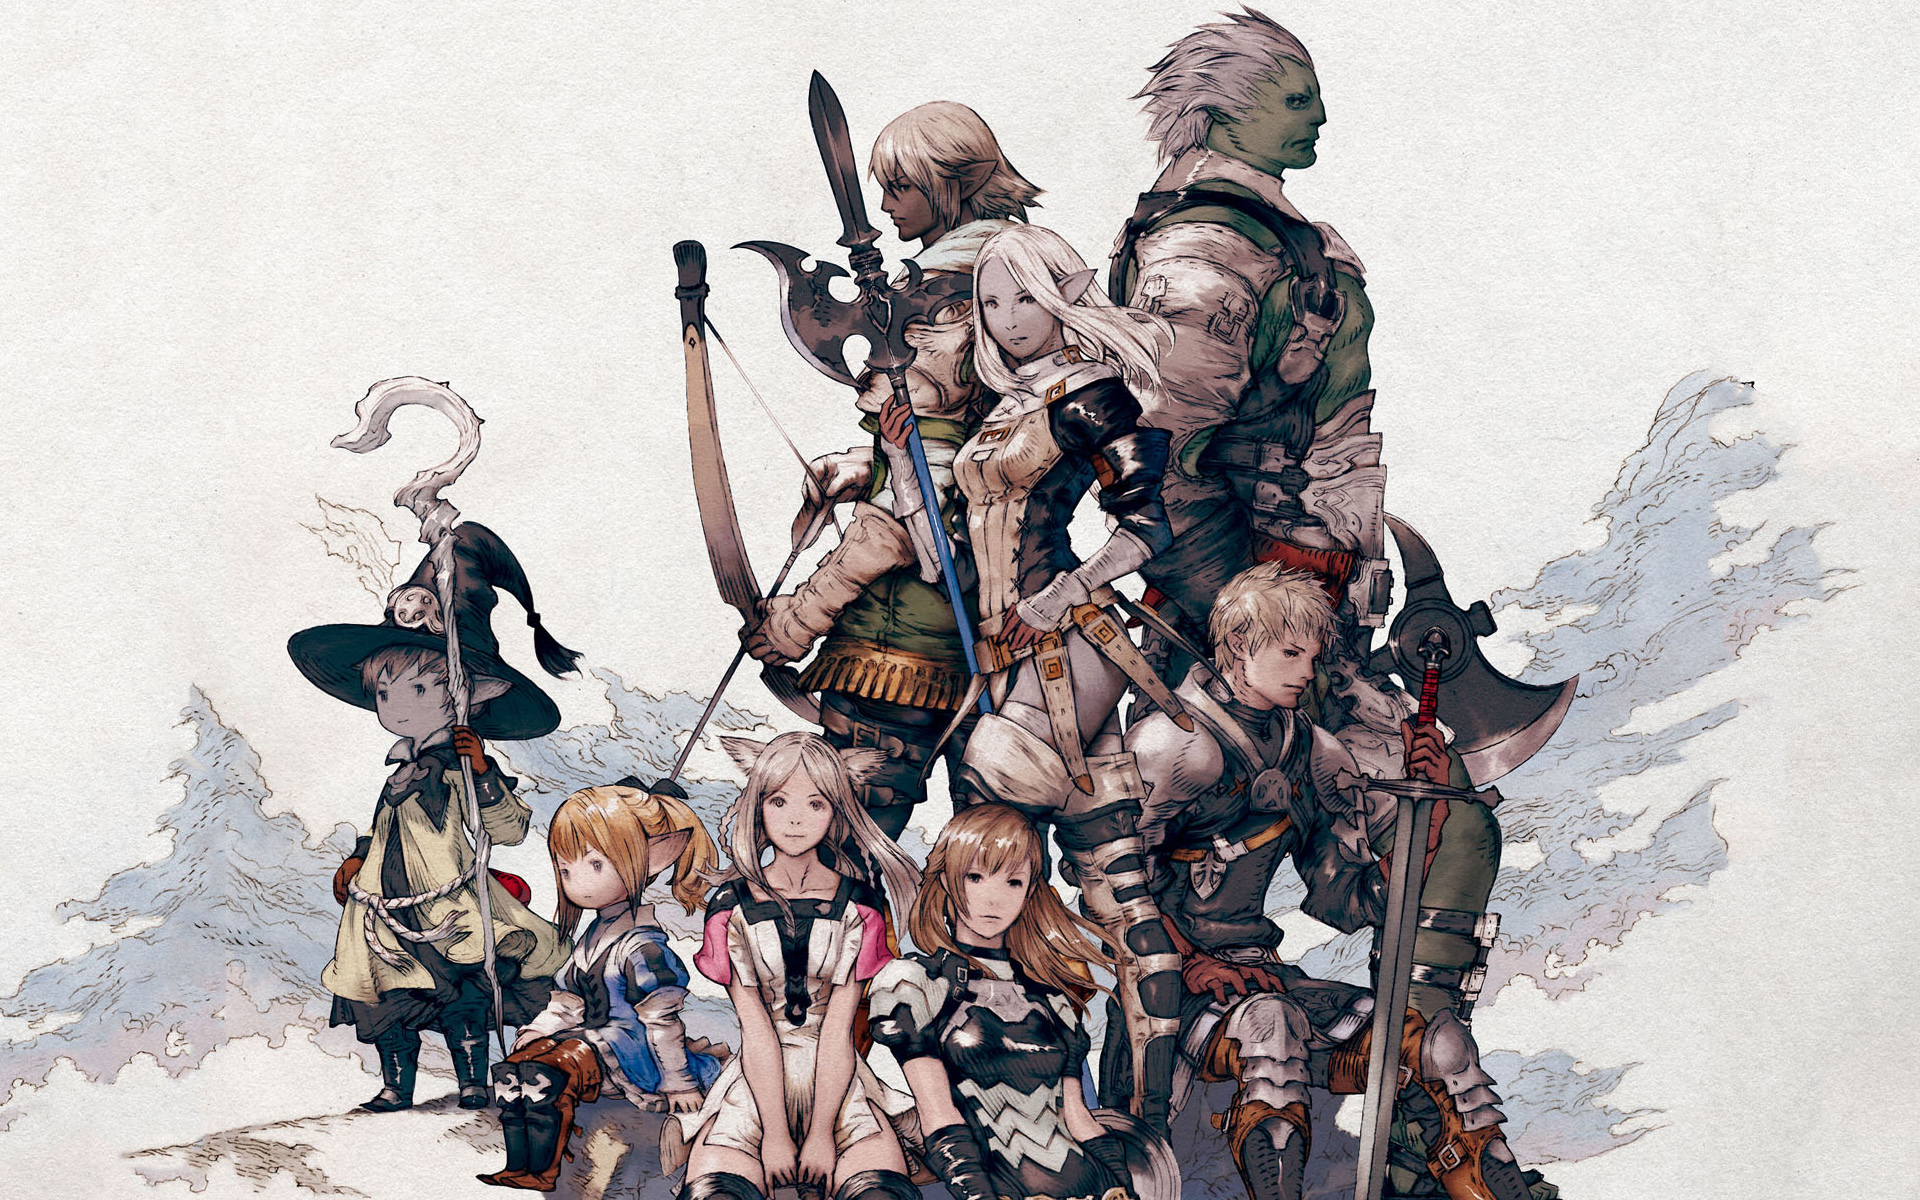 A diverse lineup of Final Fantasy XIV characters in a vibrant desktop wallpaper.